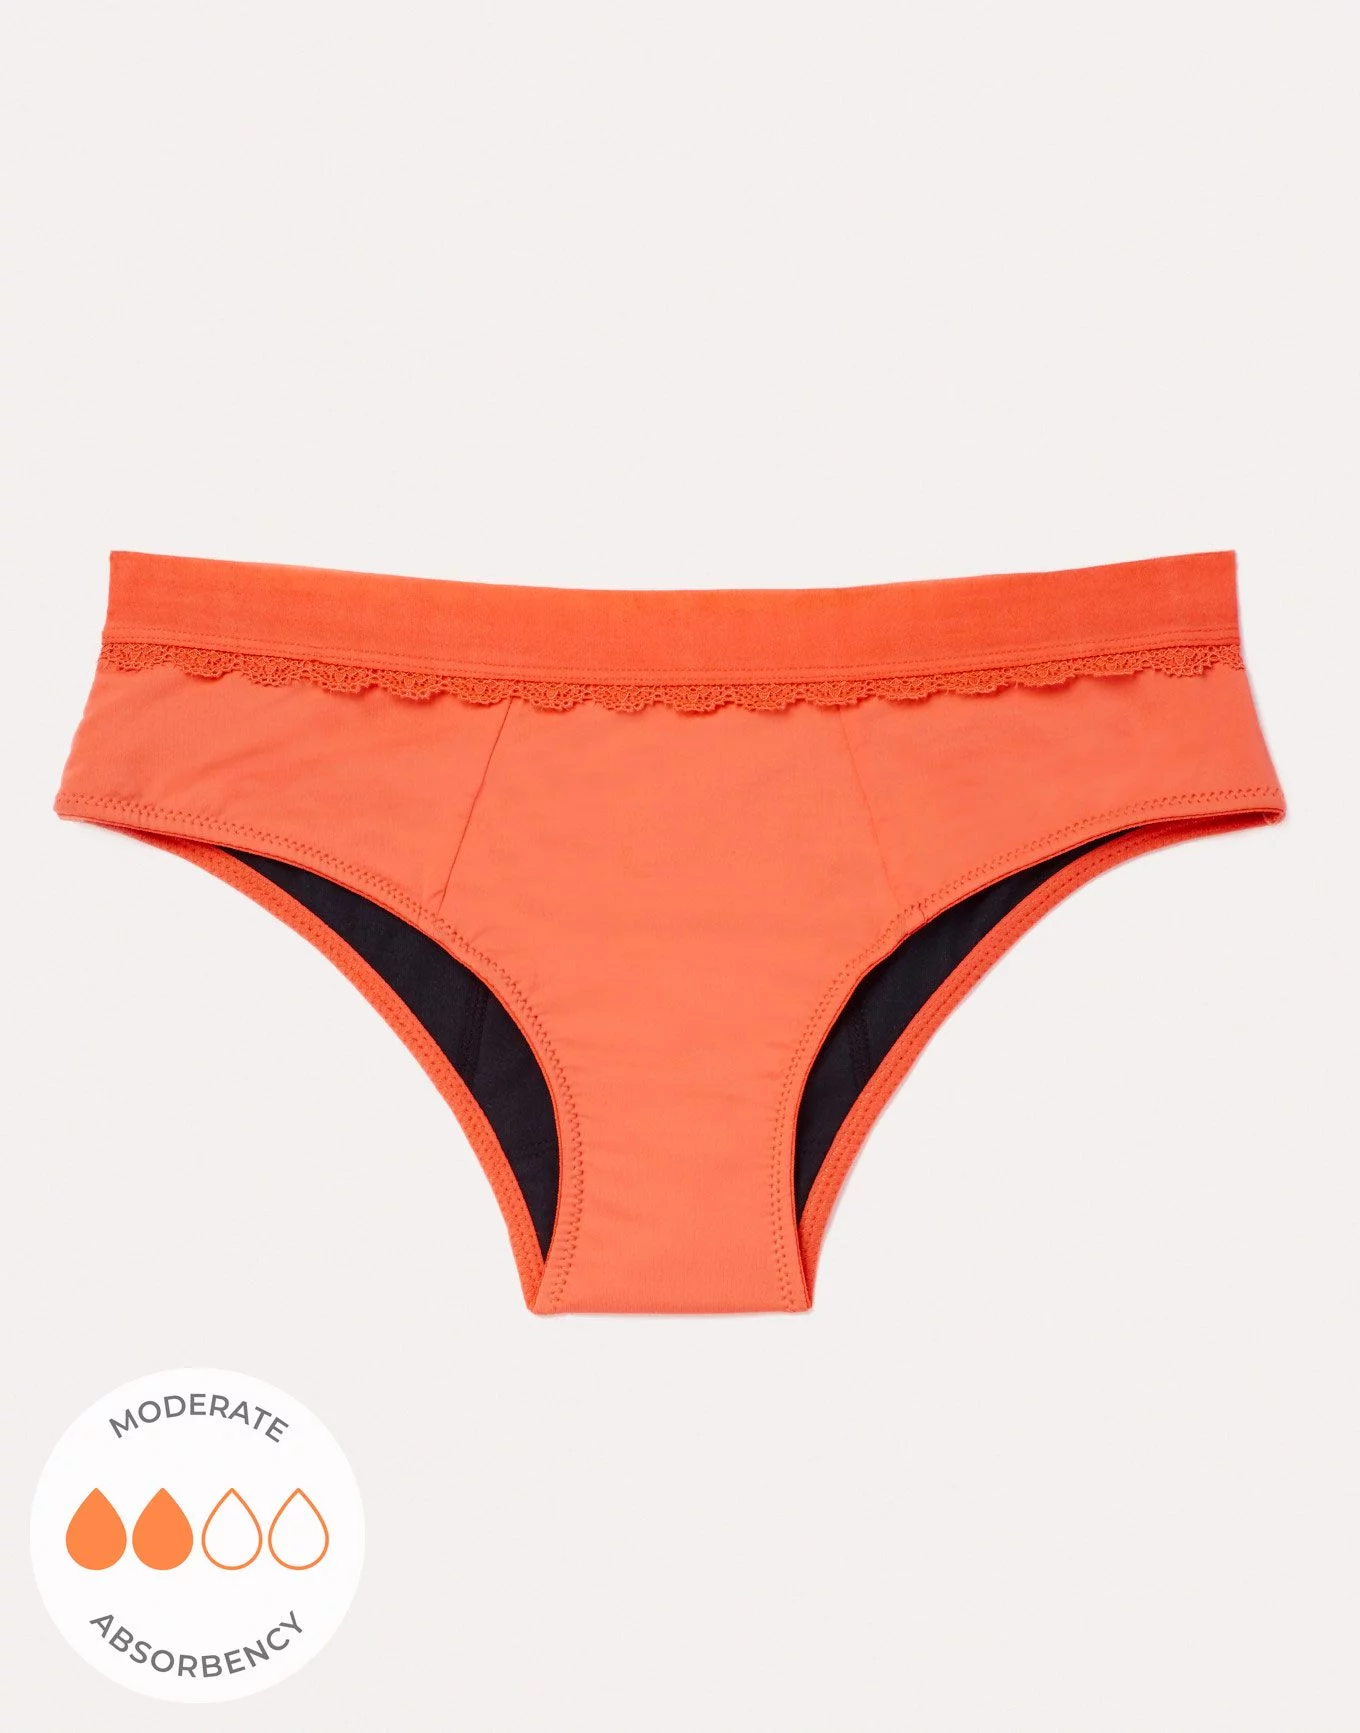 Cindy Cheeky Medium Orange Period Panties, XS-XL